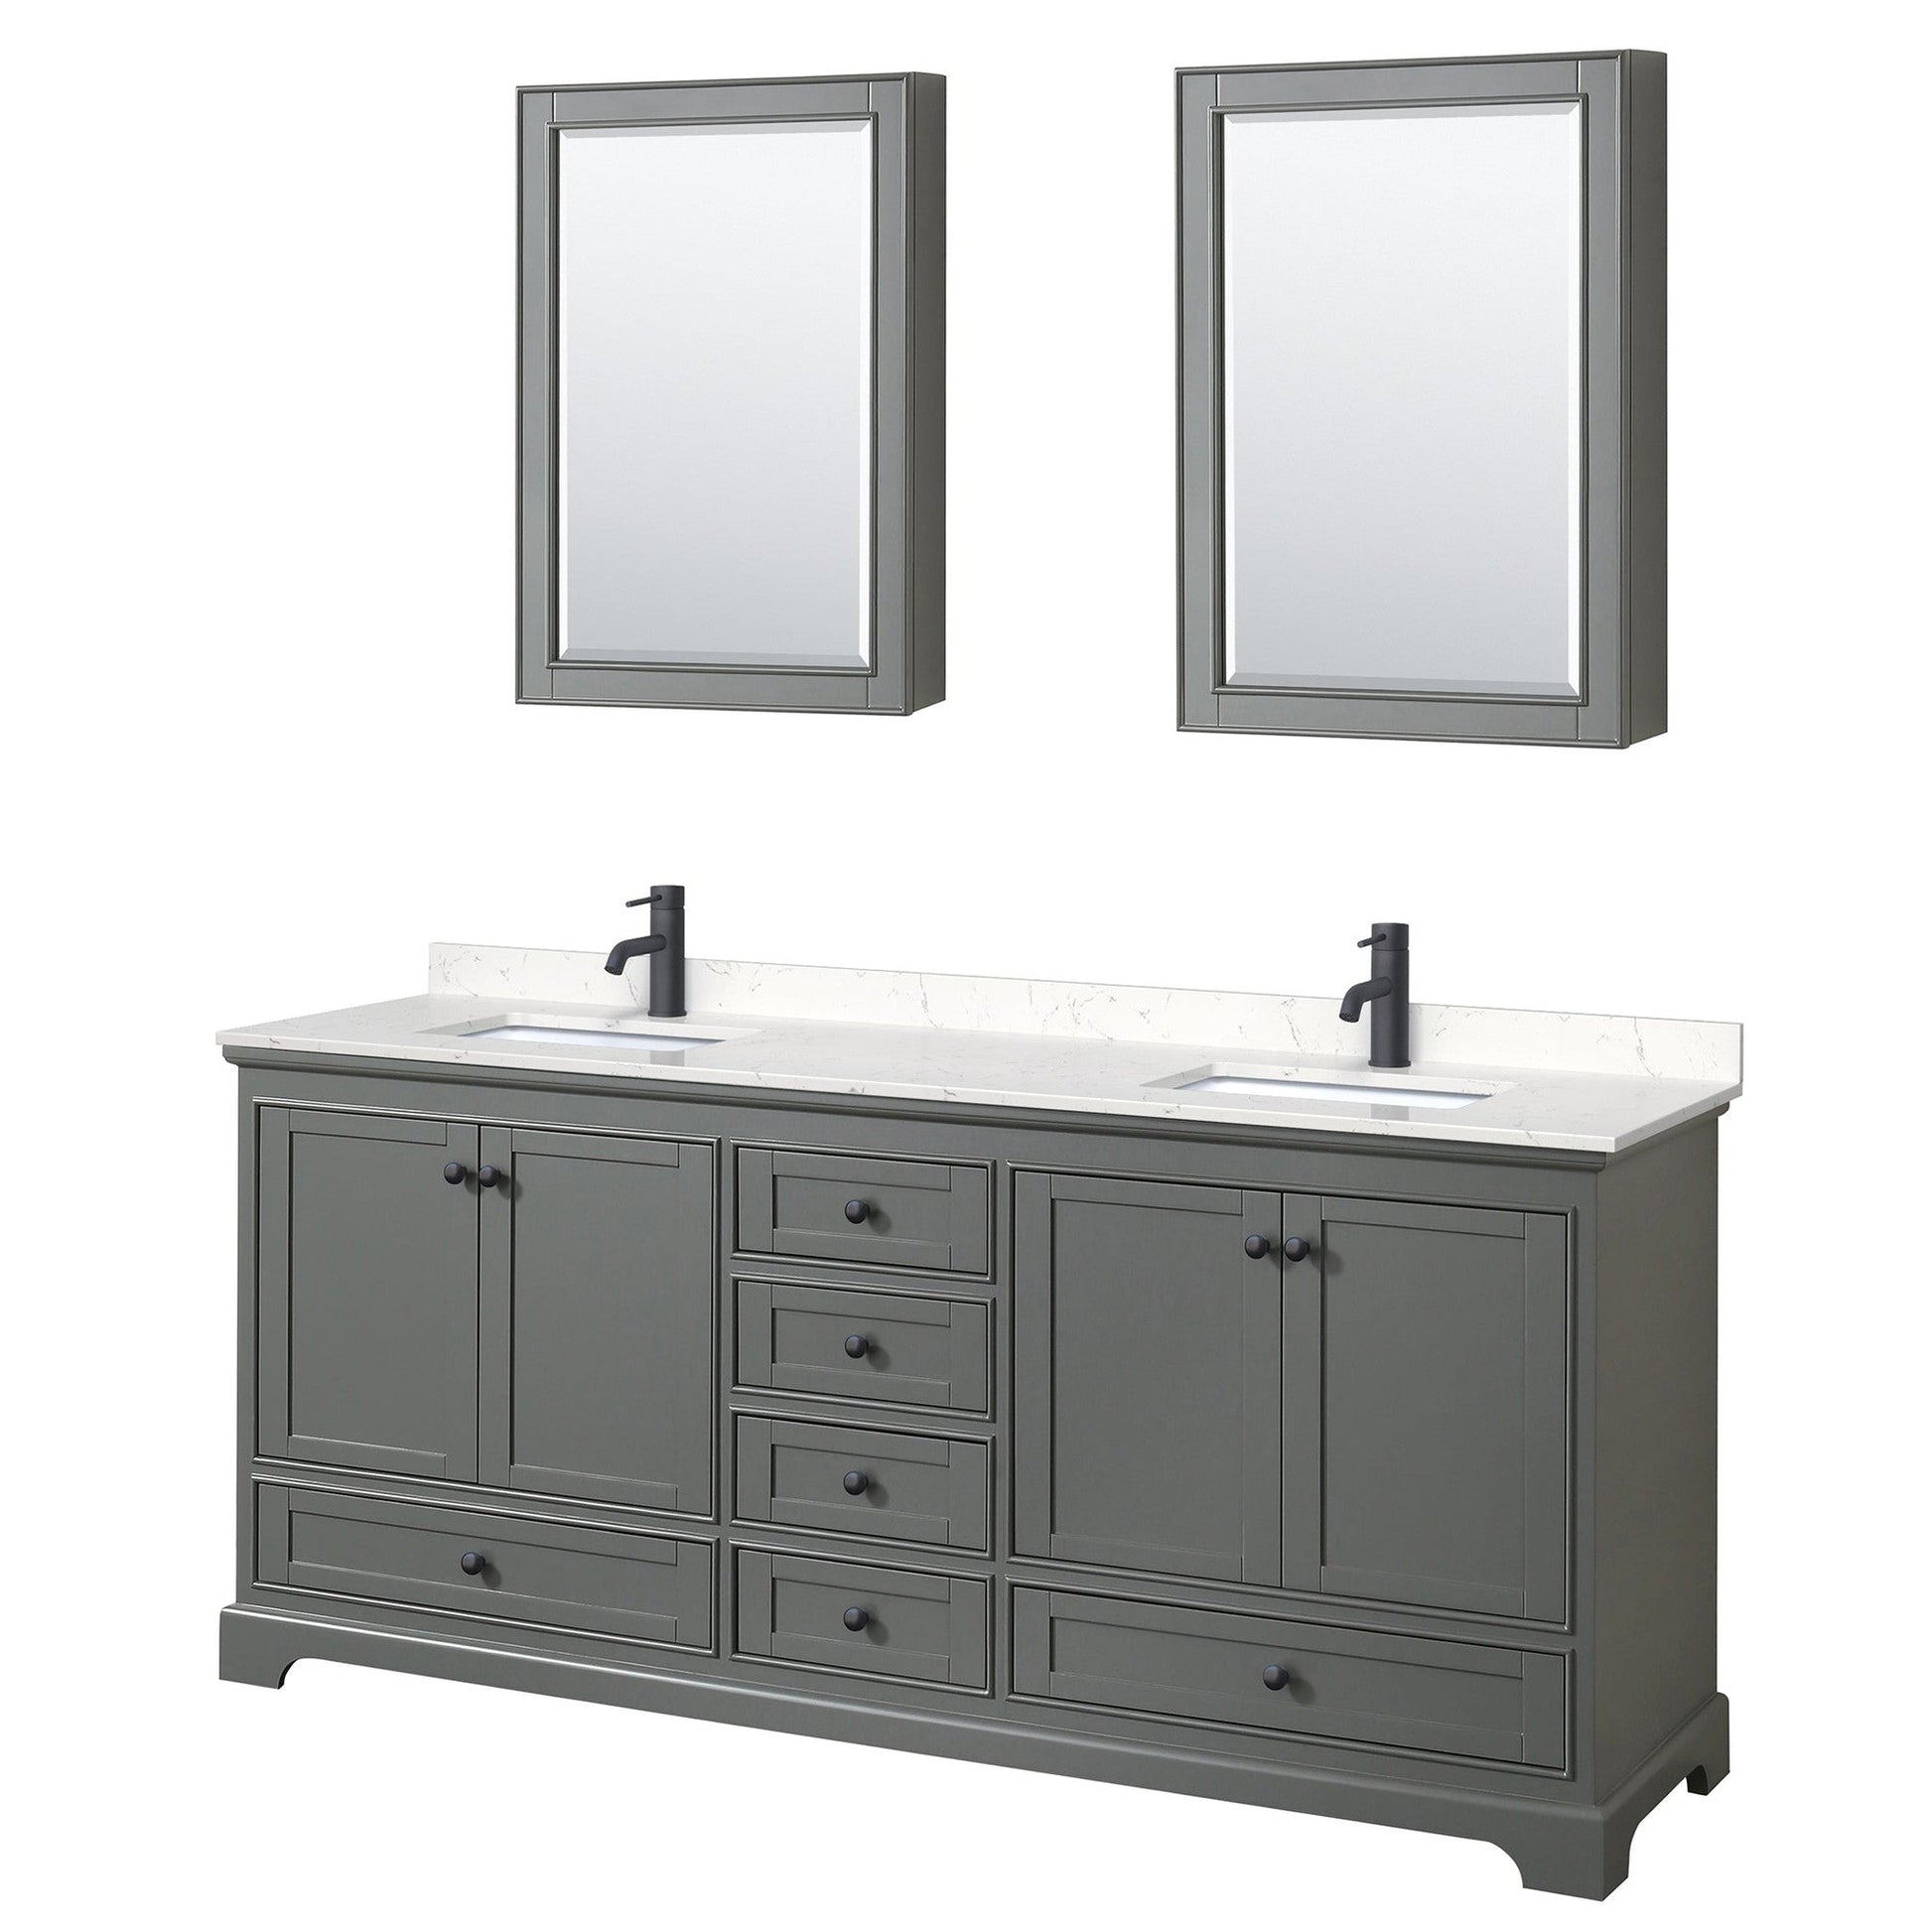 Deborah 80" Double Bathroom Vanity in Dark Gray, Carrara Cultured Marble Countertop, Undermount Square Sinks, Matte Black Trim, Medicine Cabinets